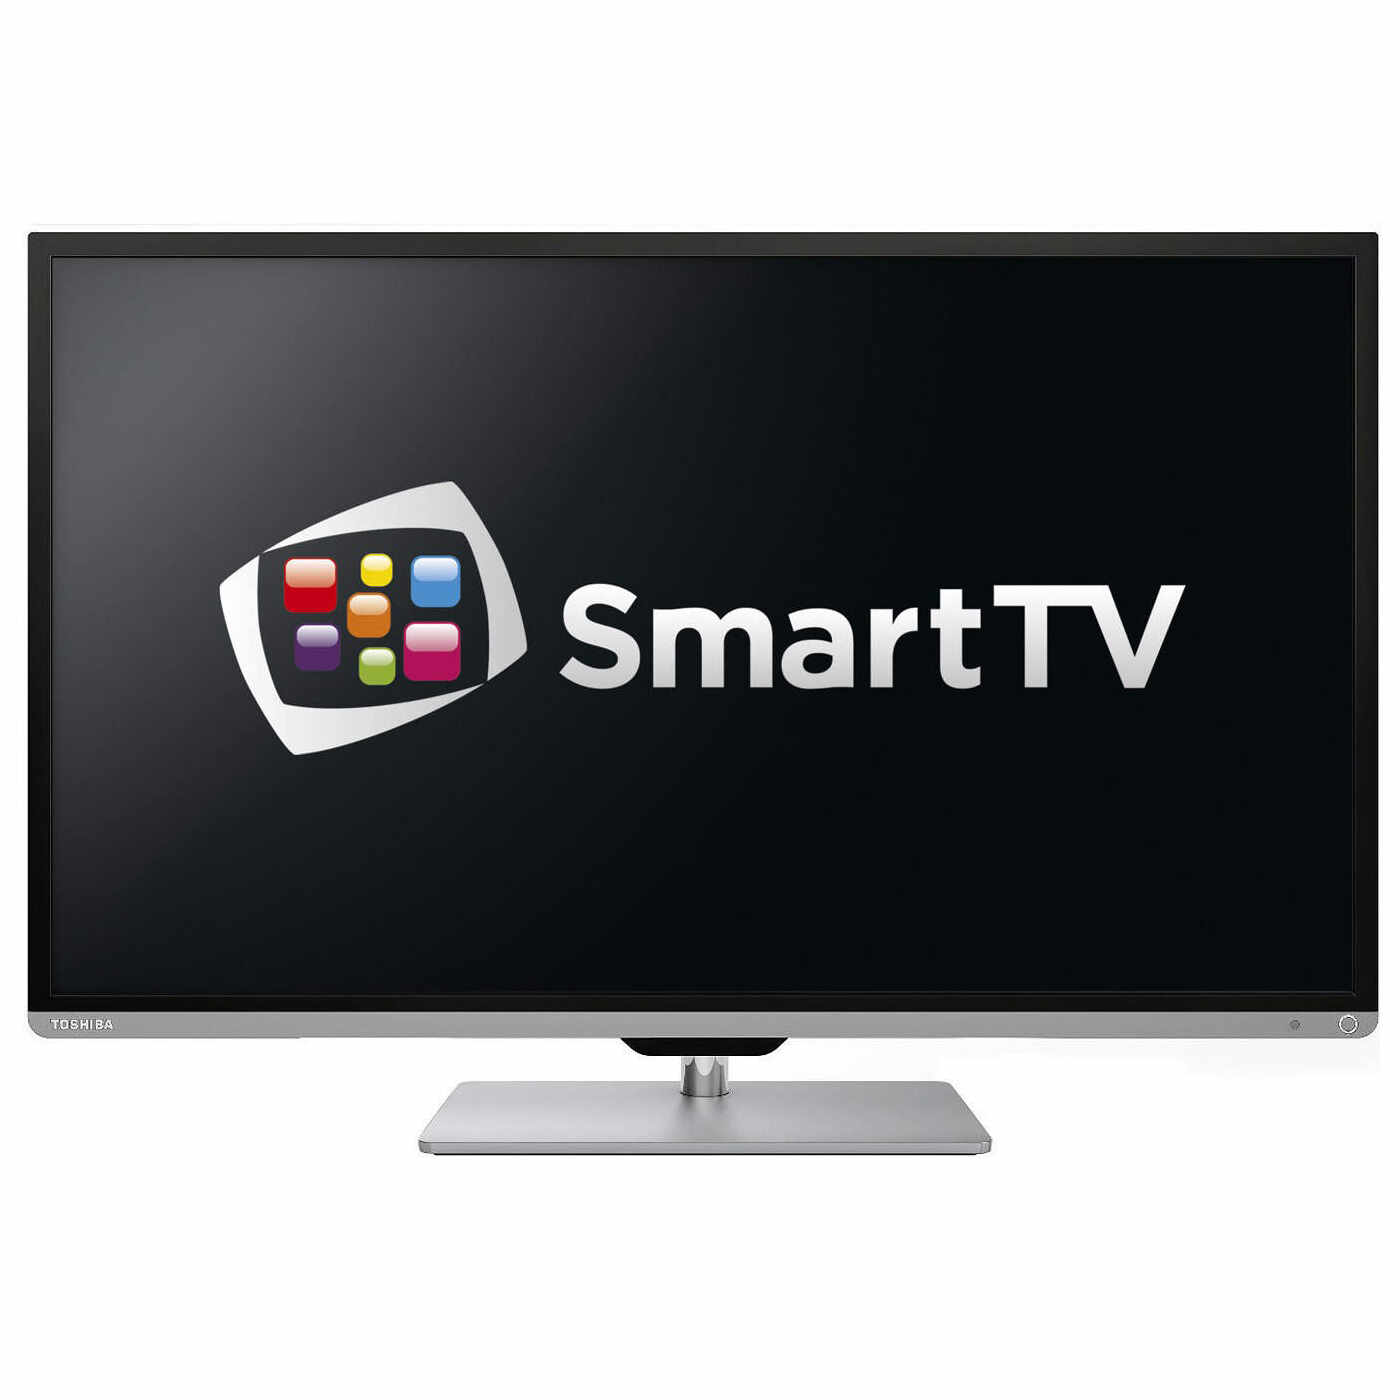 Televizor Smart 3D Second Hand Toshiba 50L7355D, 50 Inch Full HD, DVB-C, DVB-T2, HDMI, VGA, SCART, USB, Retea, Wi-Fi, Fara Telecomanda